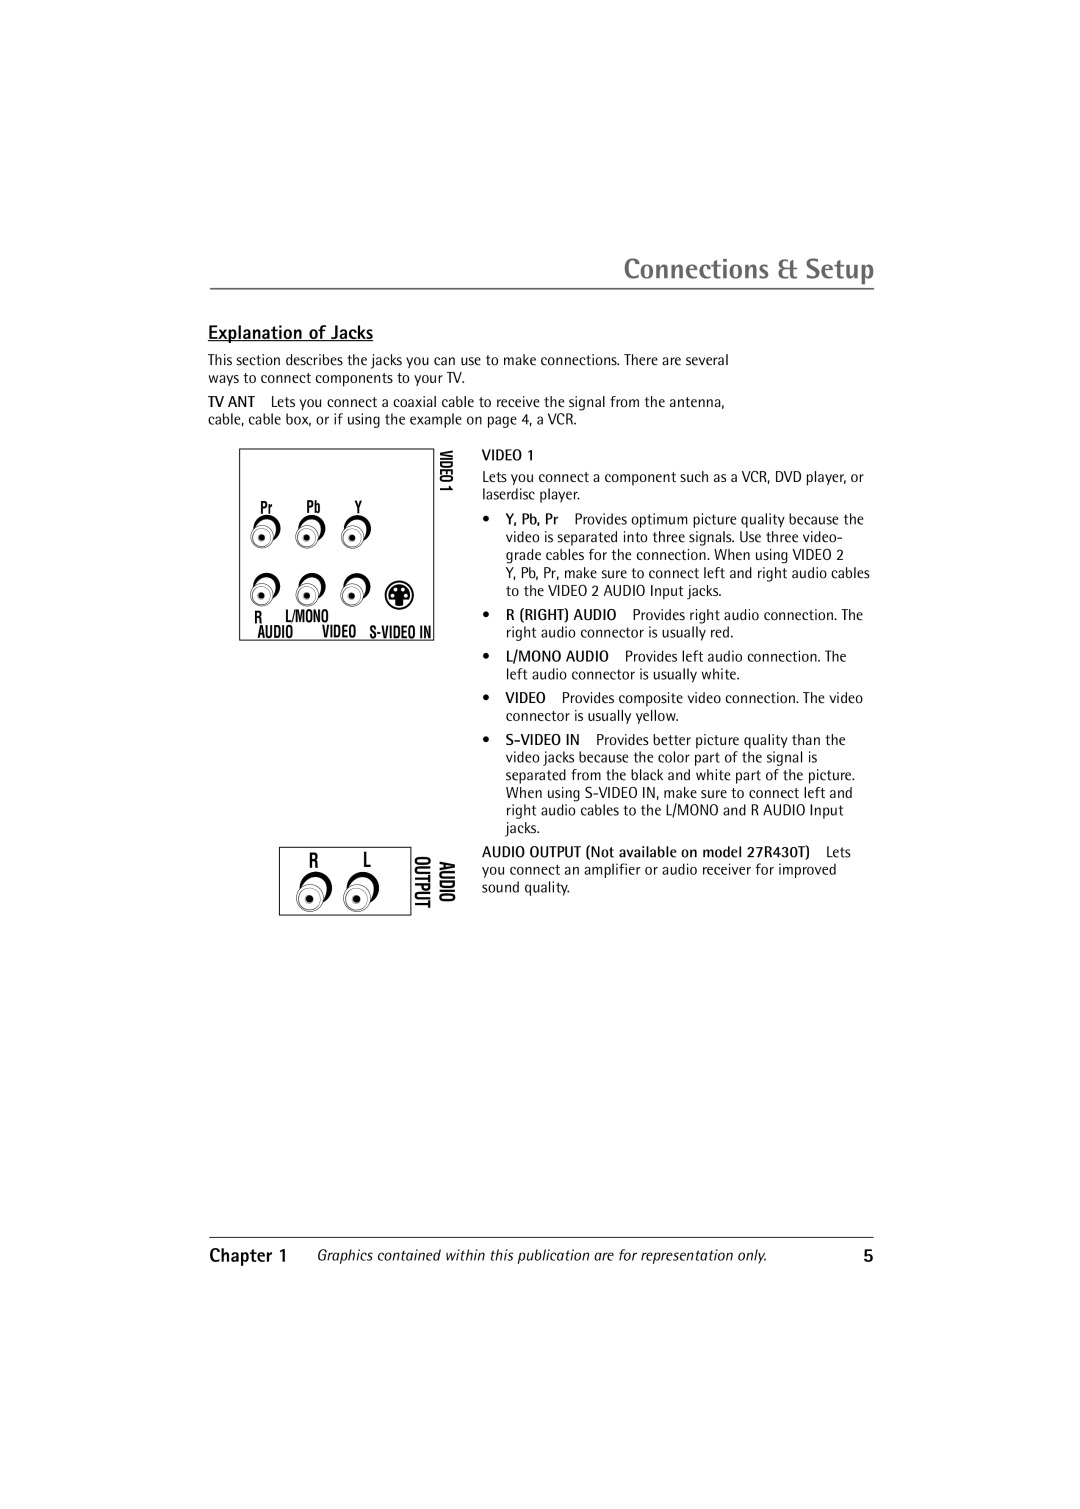 RCA 36V430T manual Explanation of Jacks, Pr Pb Y, L/Mono, Audio, Video, Connections & Setup, Chapter 